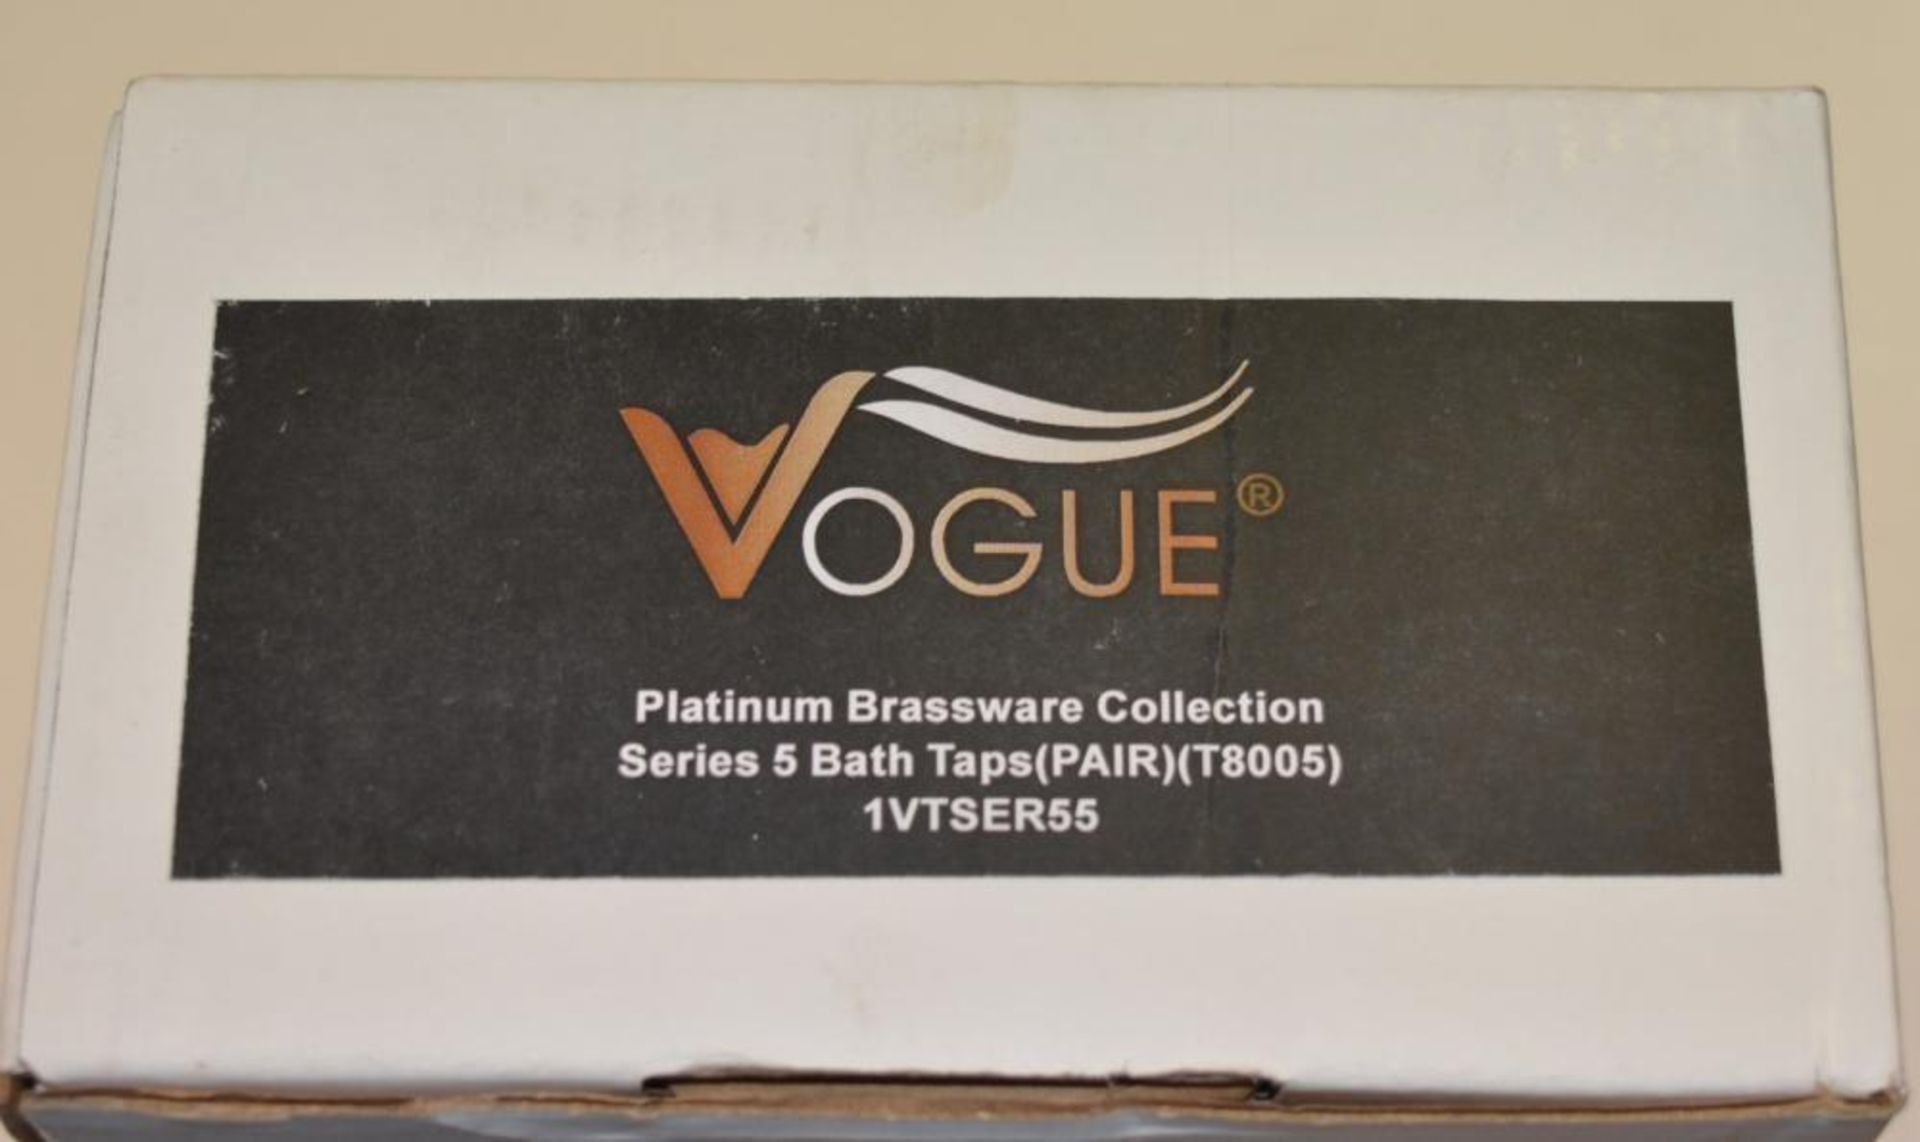 1 x Series 5 BATH TAPS - Vogue Bathrooms Platinum Brassware Collection - Pair of - Contemporary Desi - Image 3 of 7